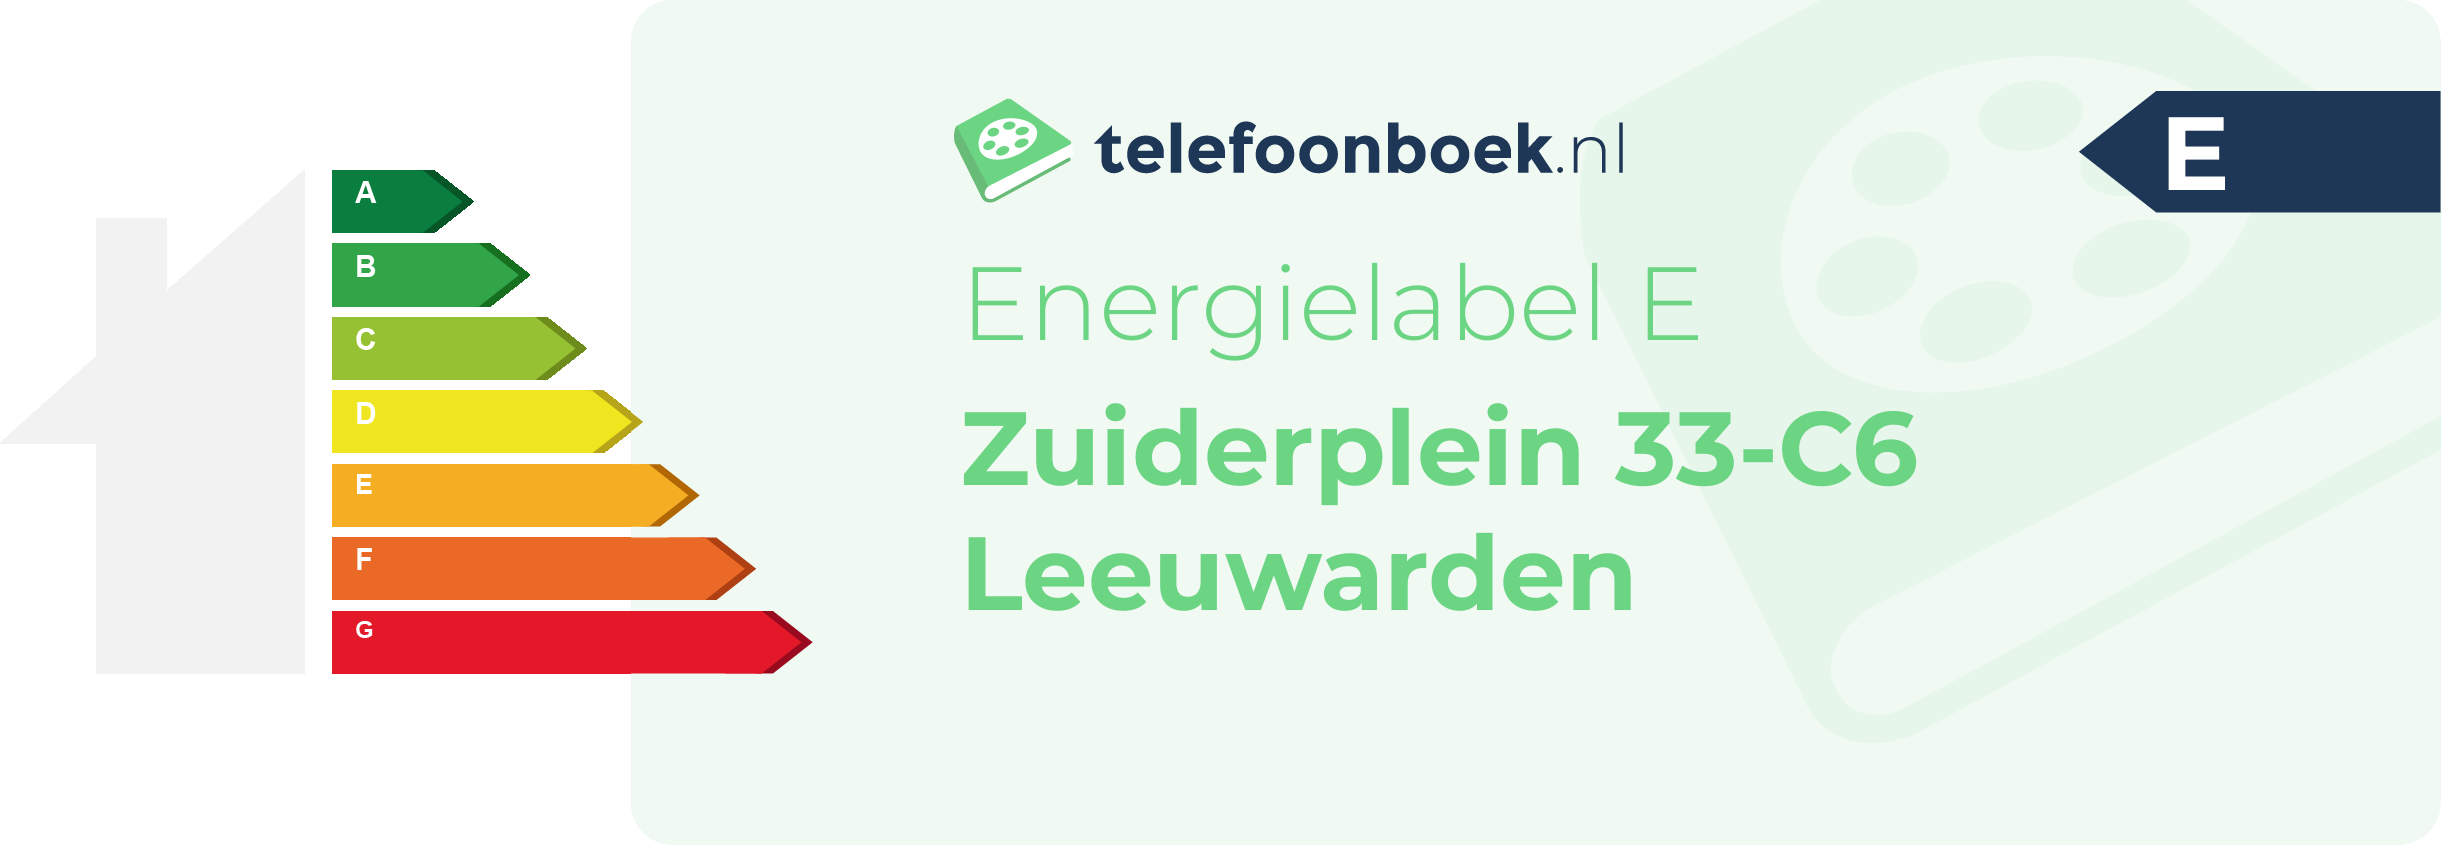 Energielabel Zuiderplein 33-C6 Leeuwarden